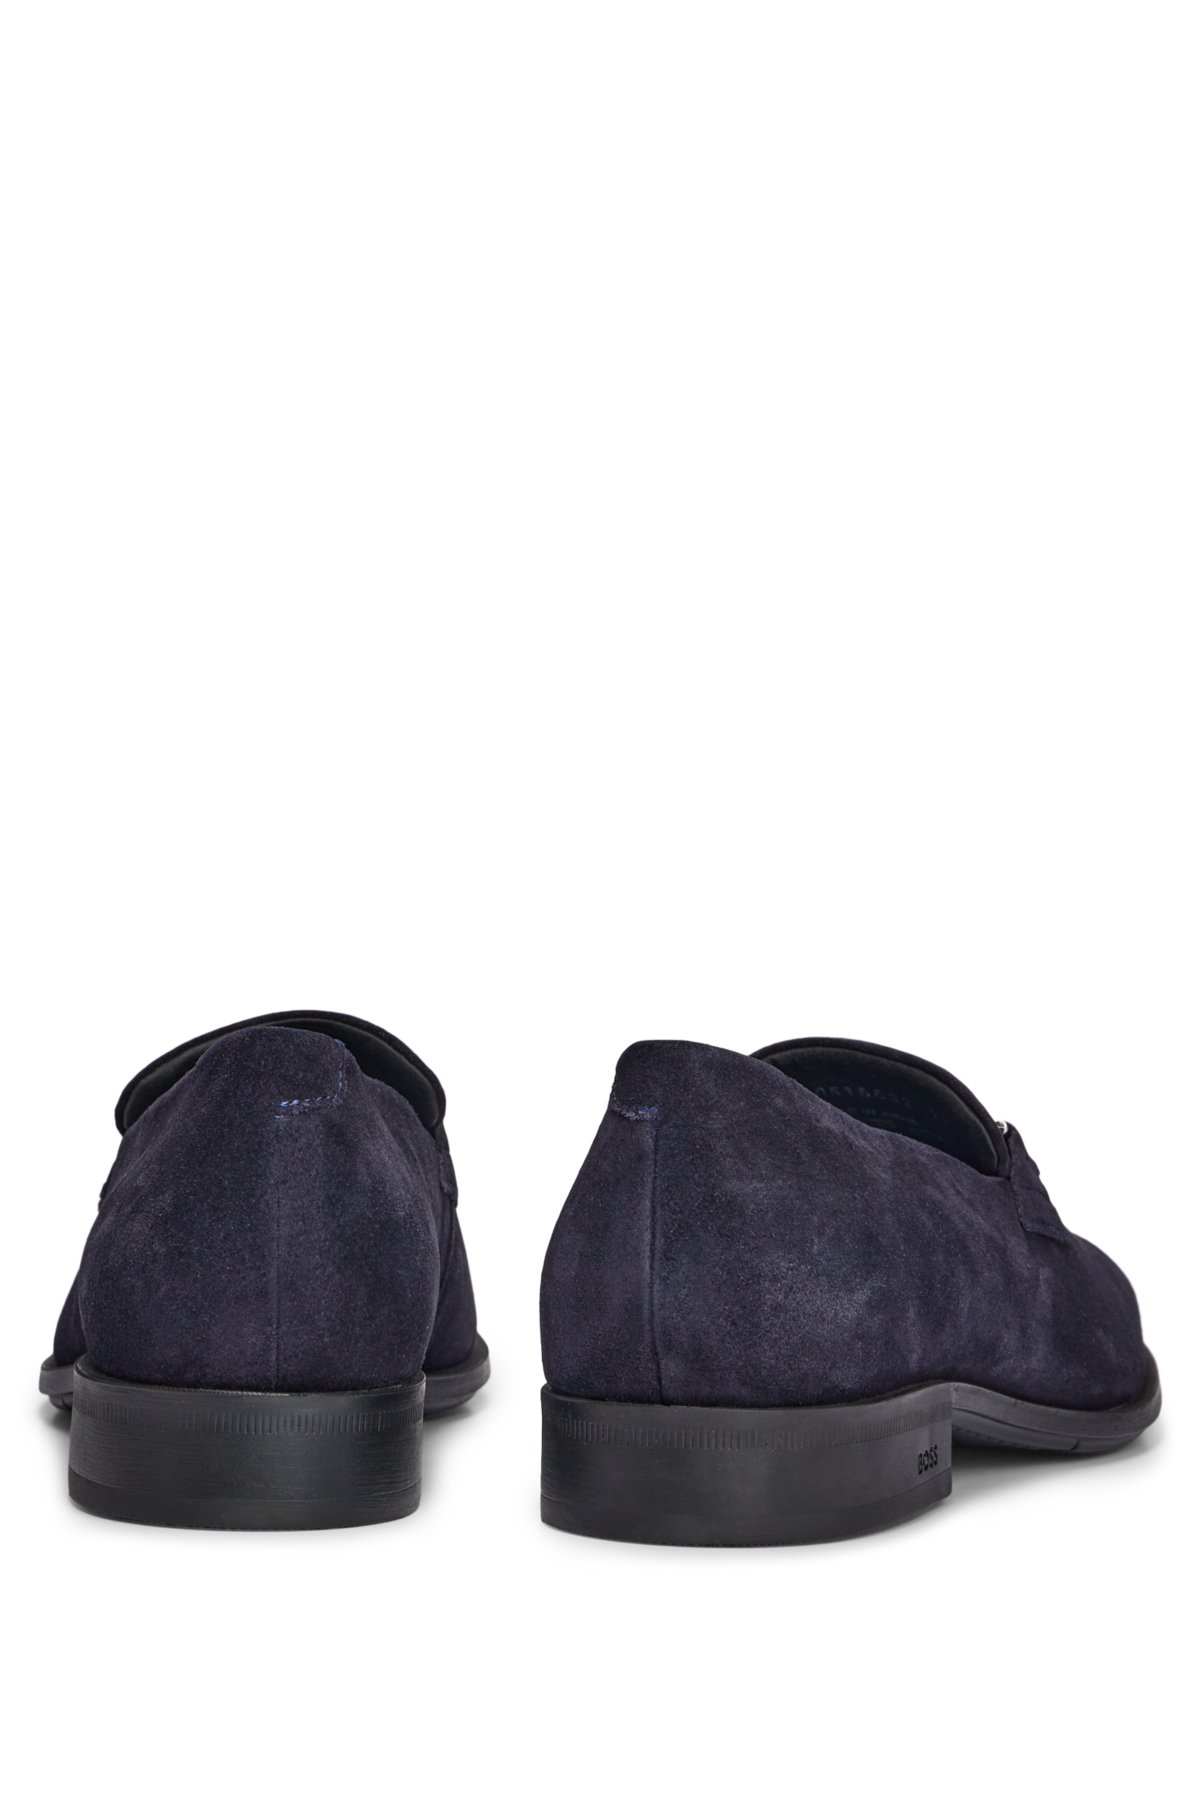 Suede loafers with branded hardware trim, Dark Blue